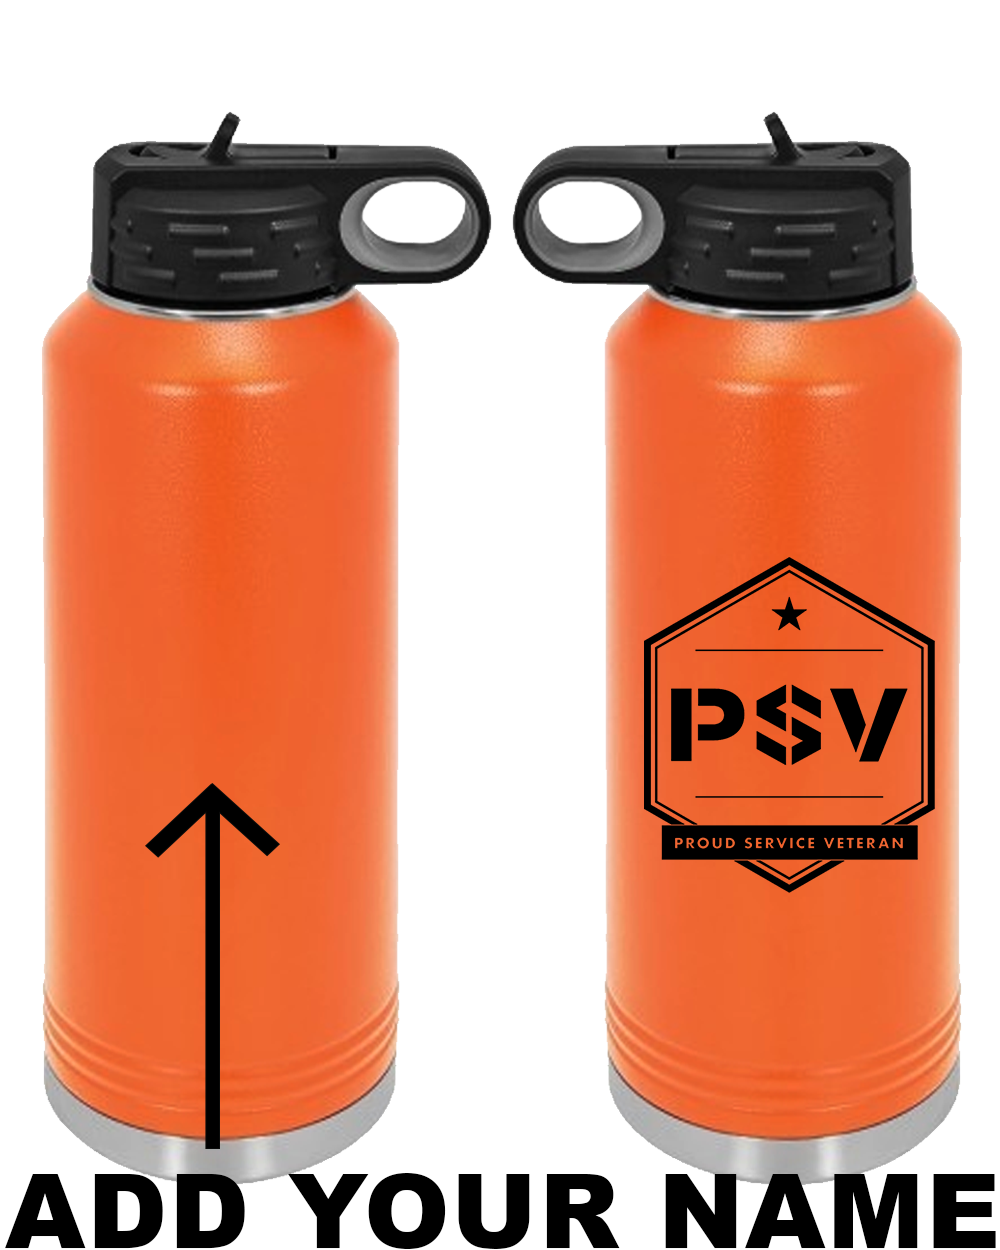 PSV 40oz. Stainless Steel Water Bottle - Orange